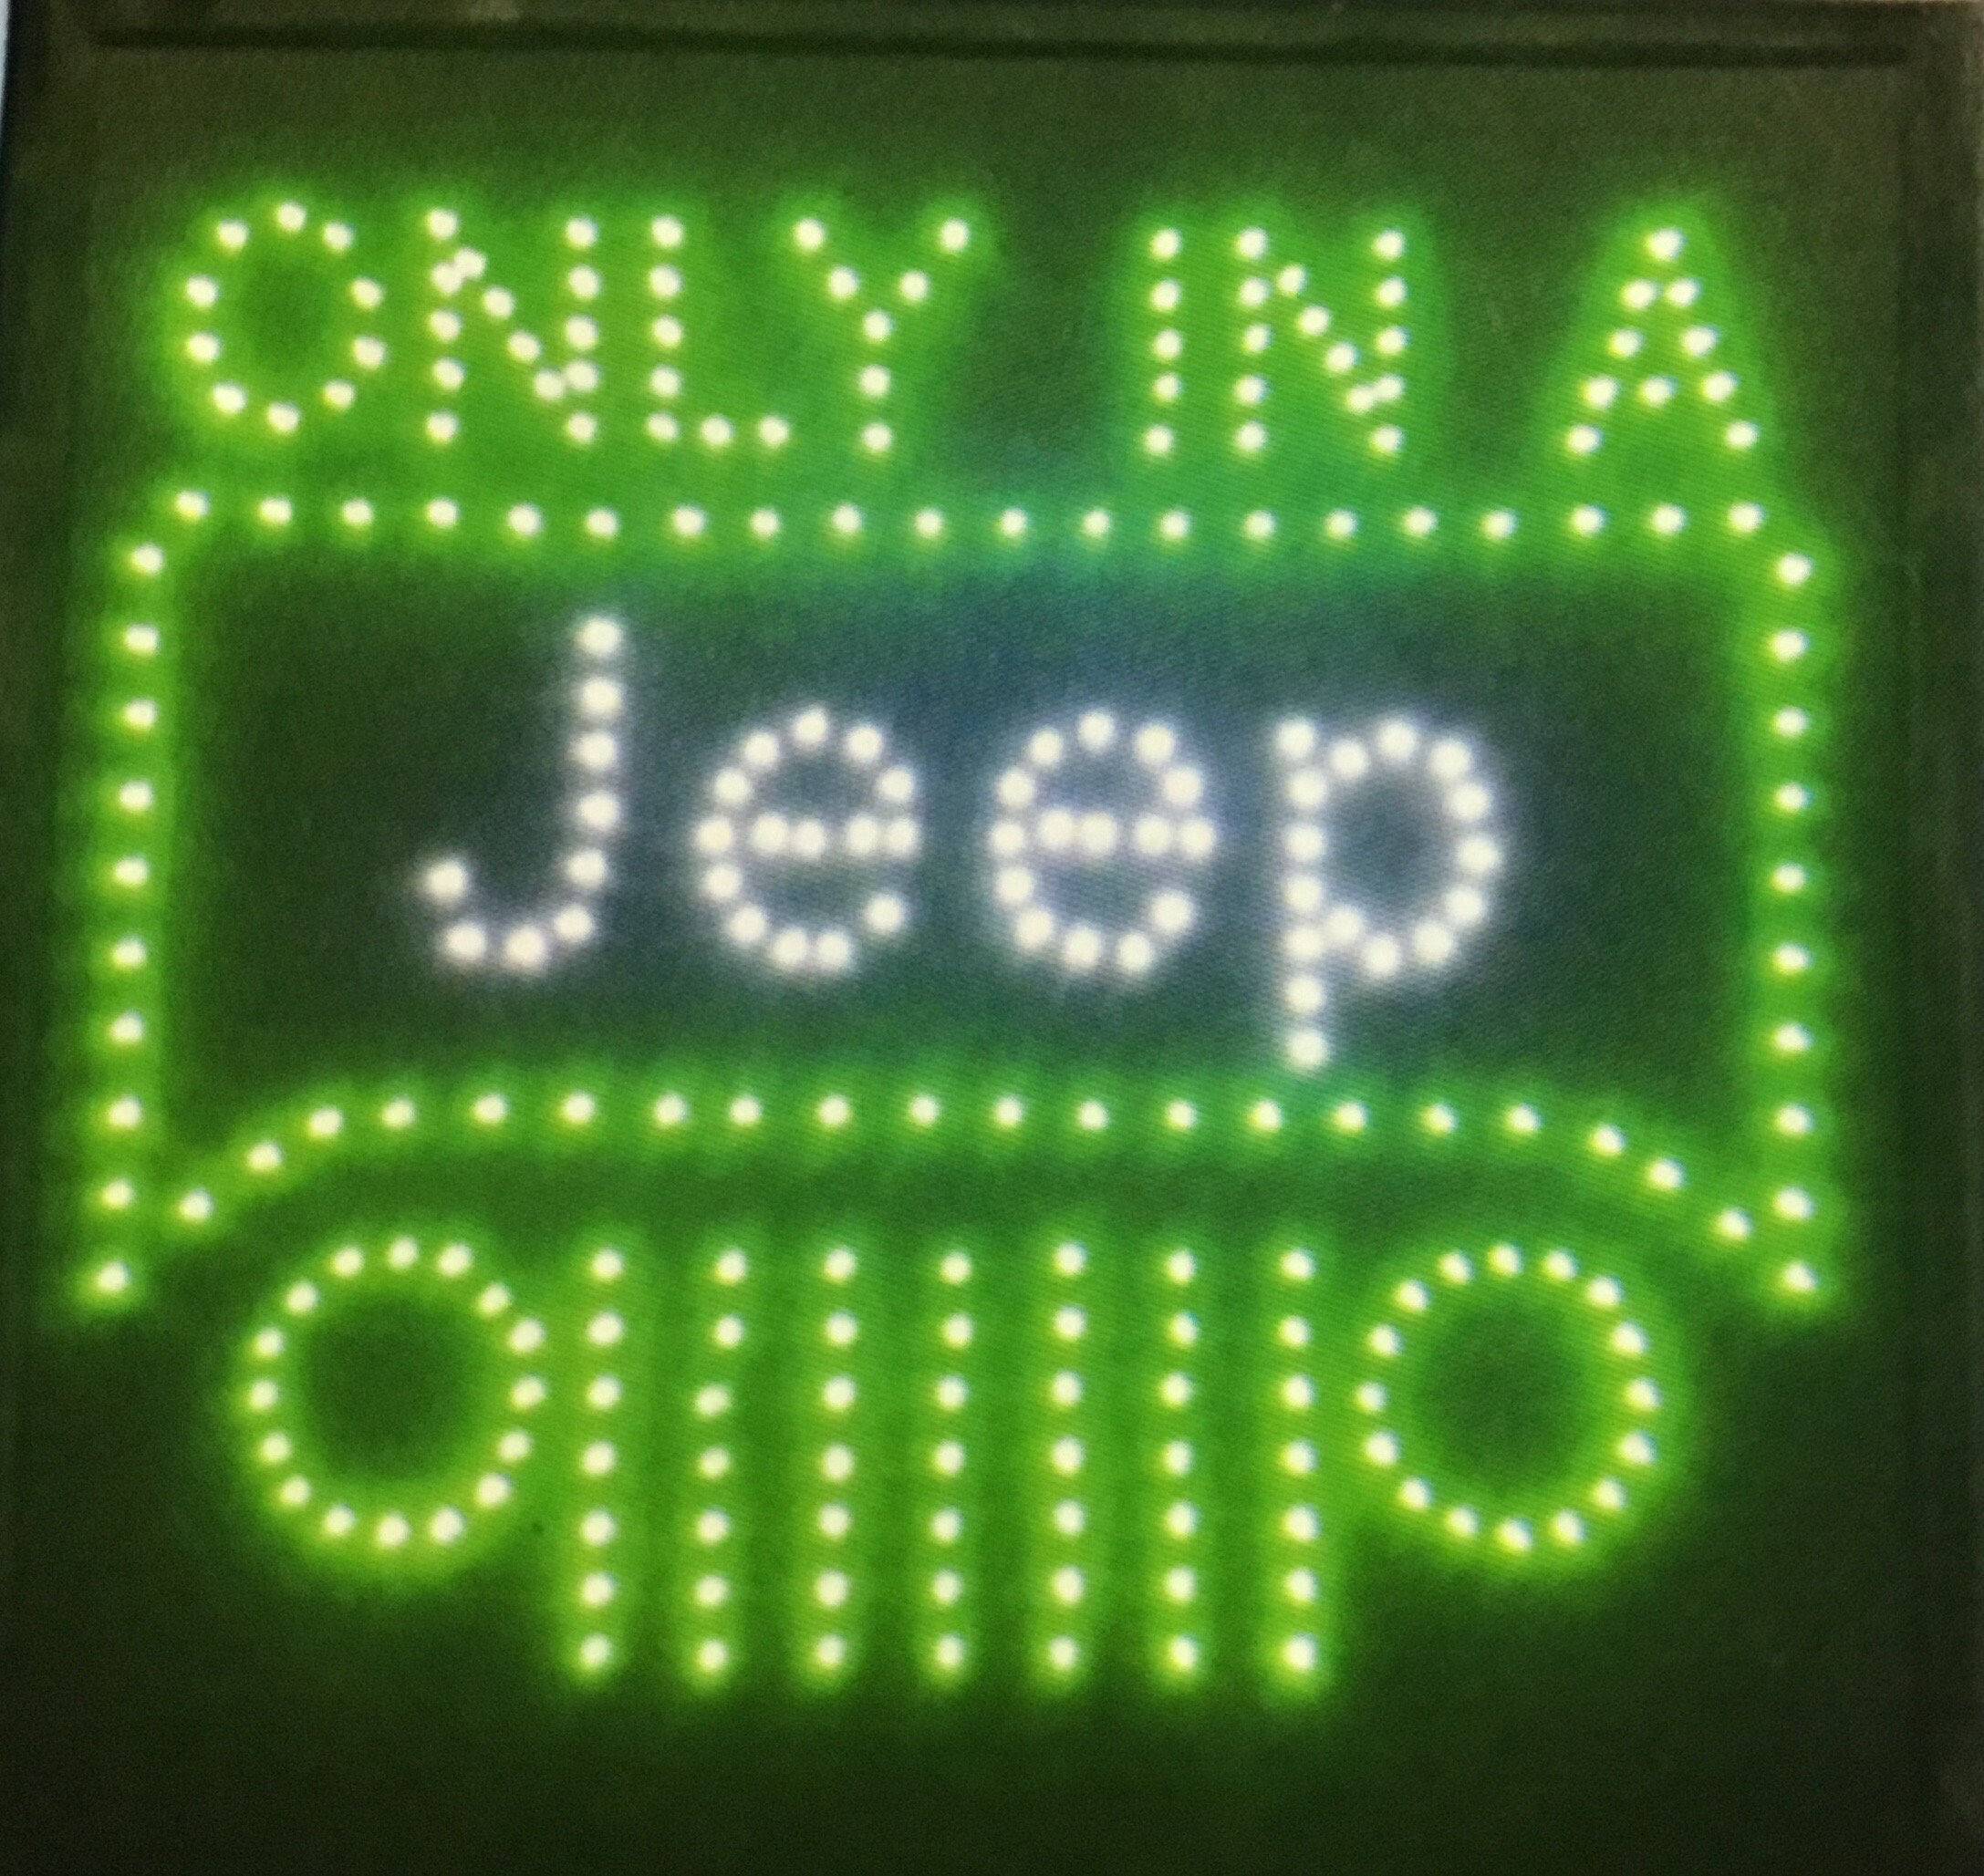 Led jeep sign -  France